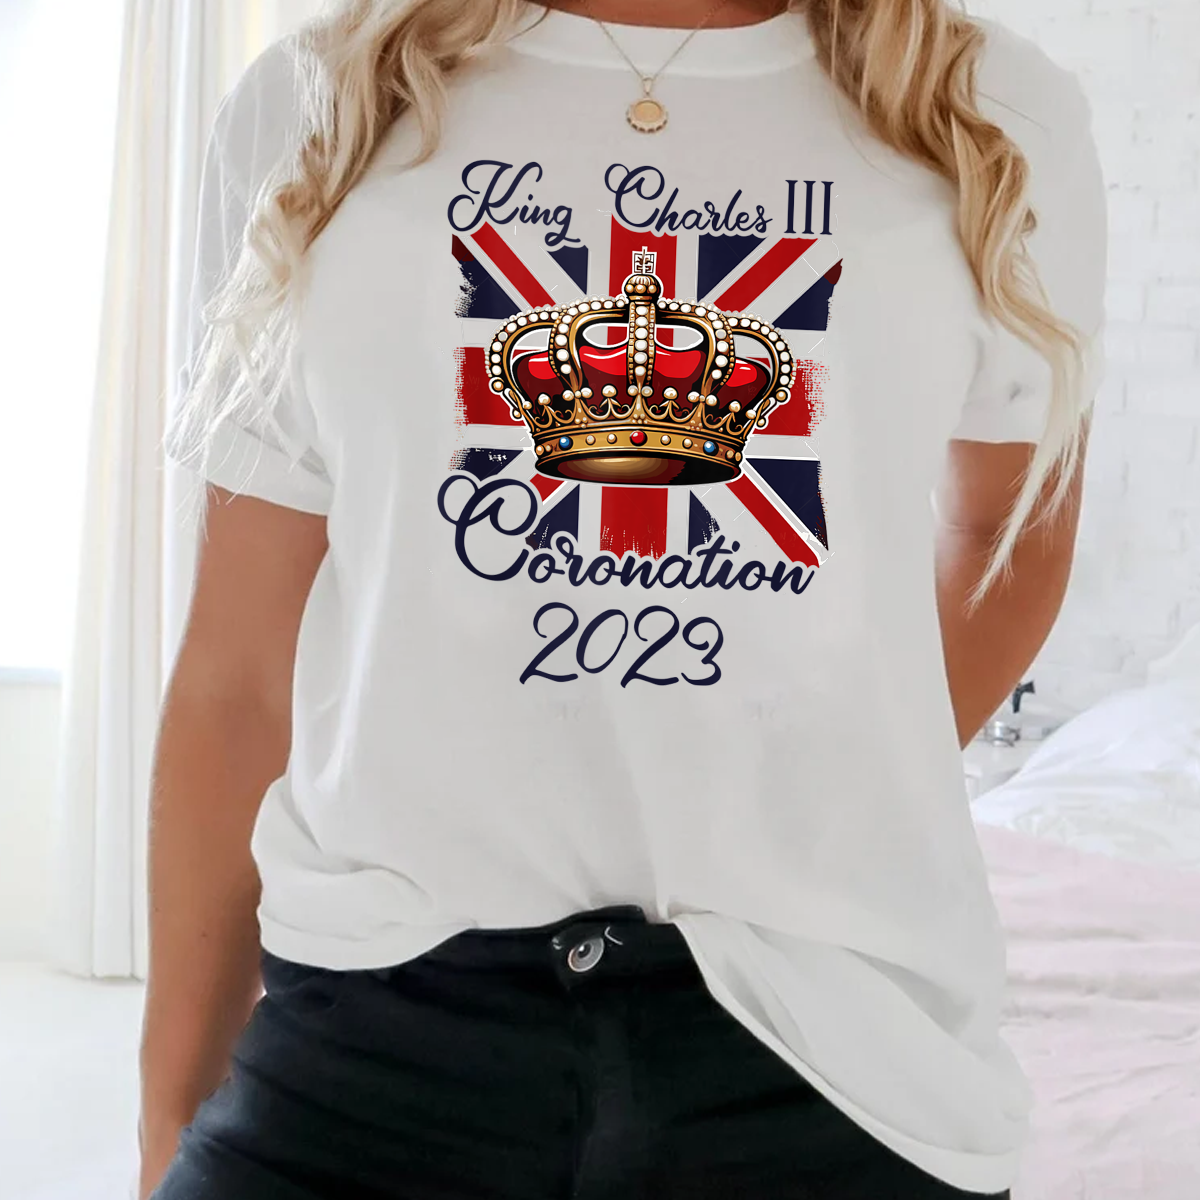 King Charles III Coronation Day White T-Shirt - Kids & Adults